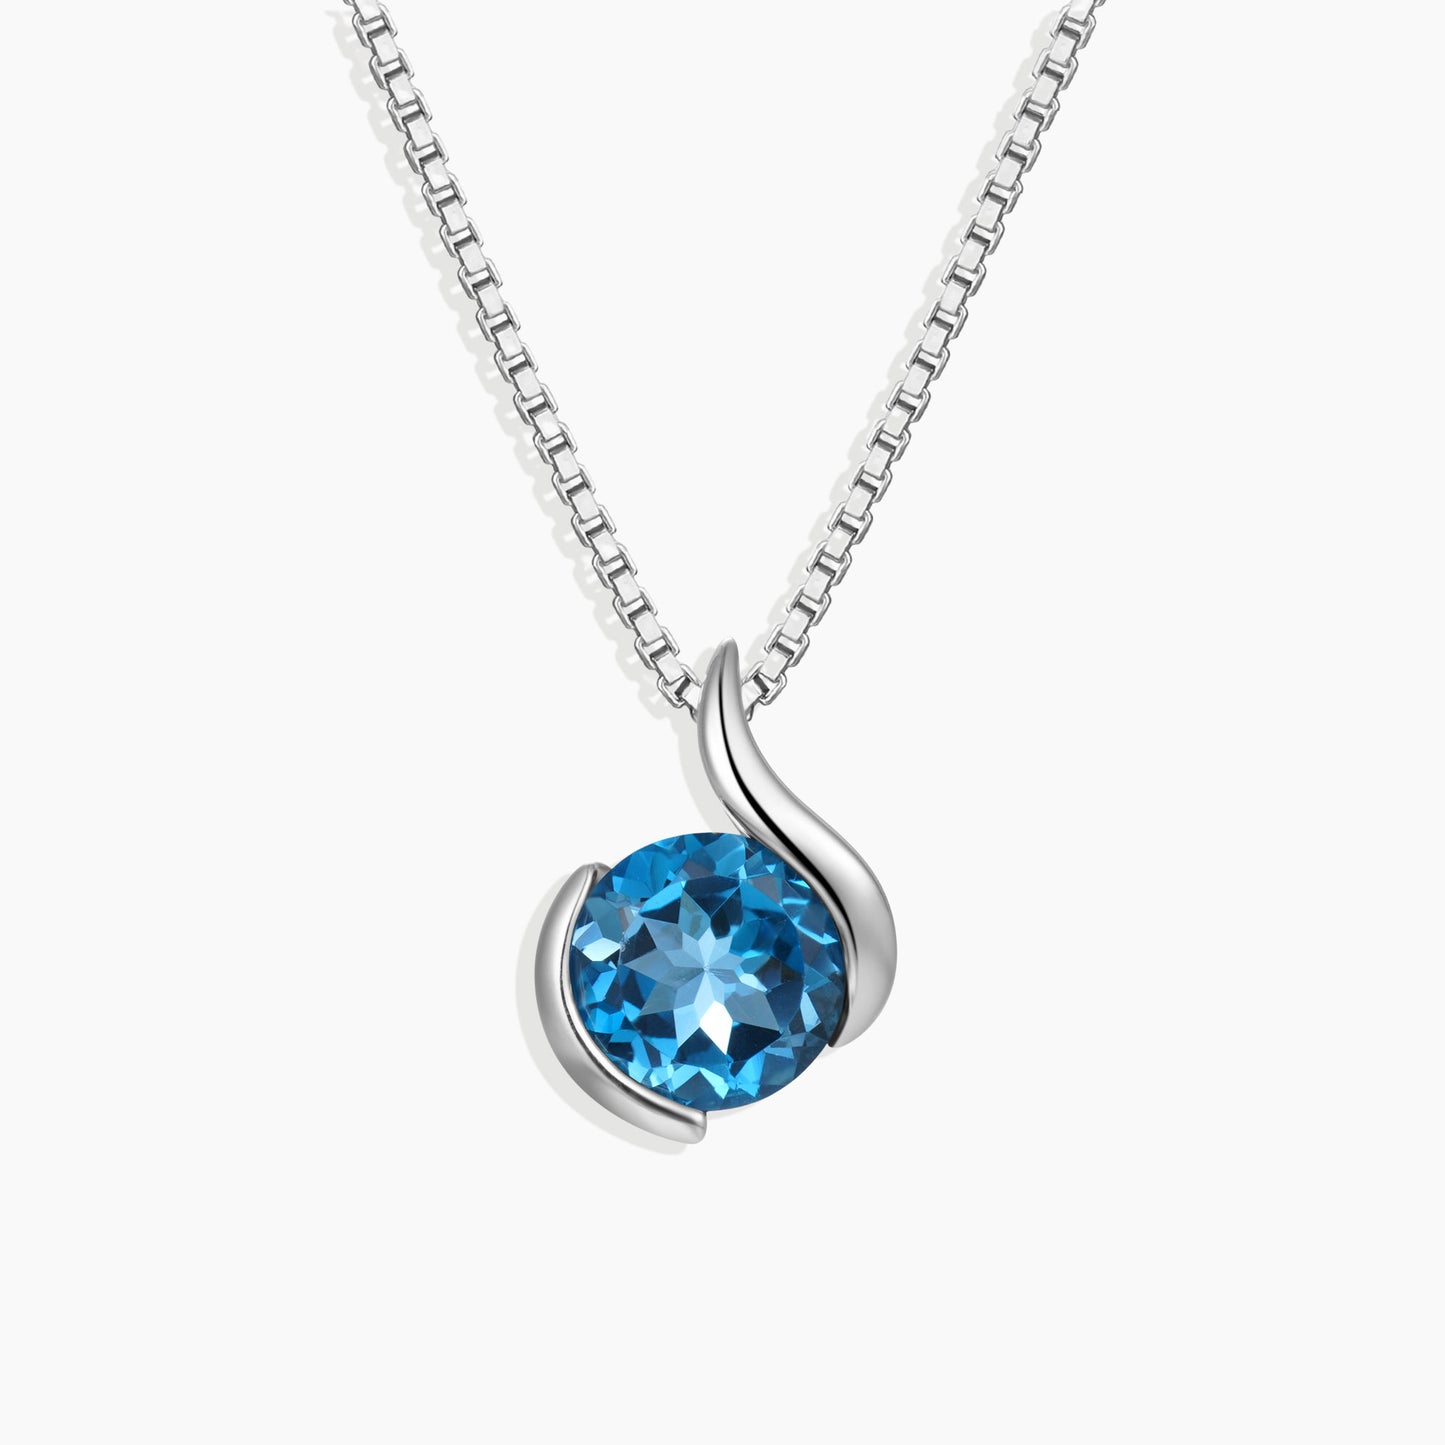 London Blue Topaz Monarch Pendant Necklace in Sterling Silver